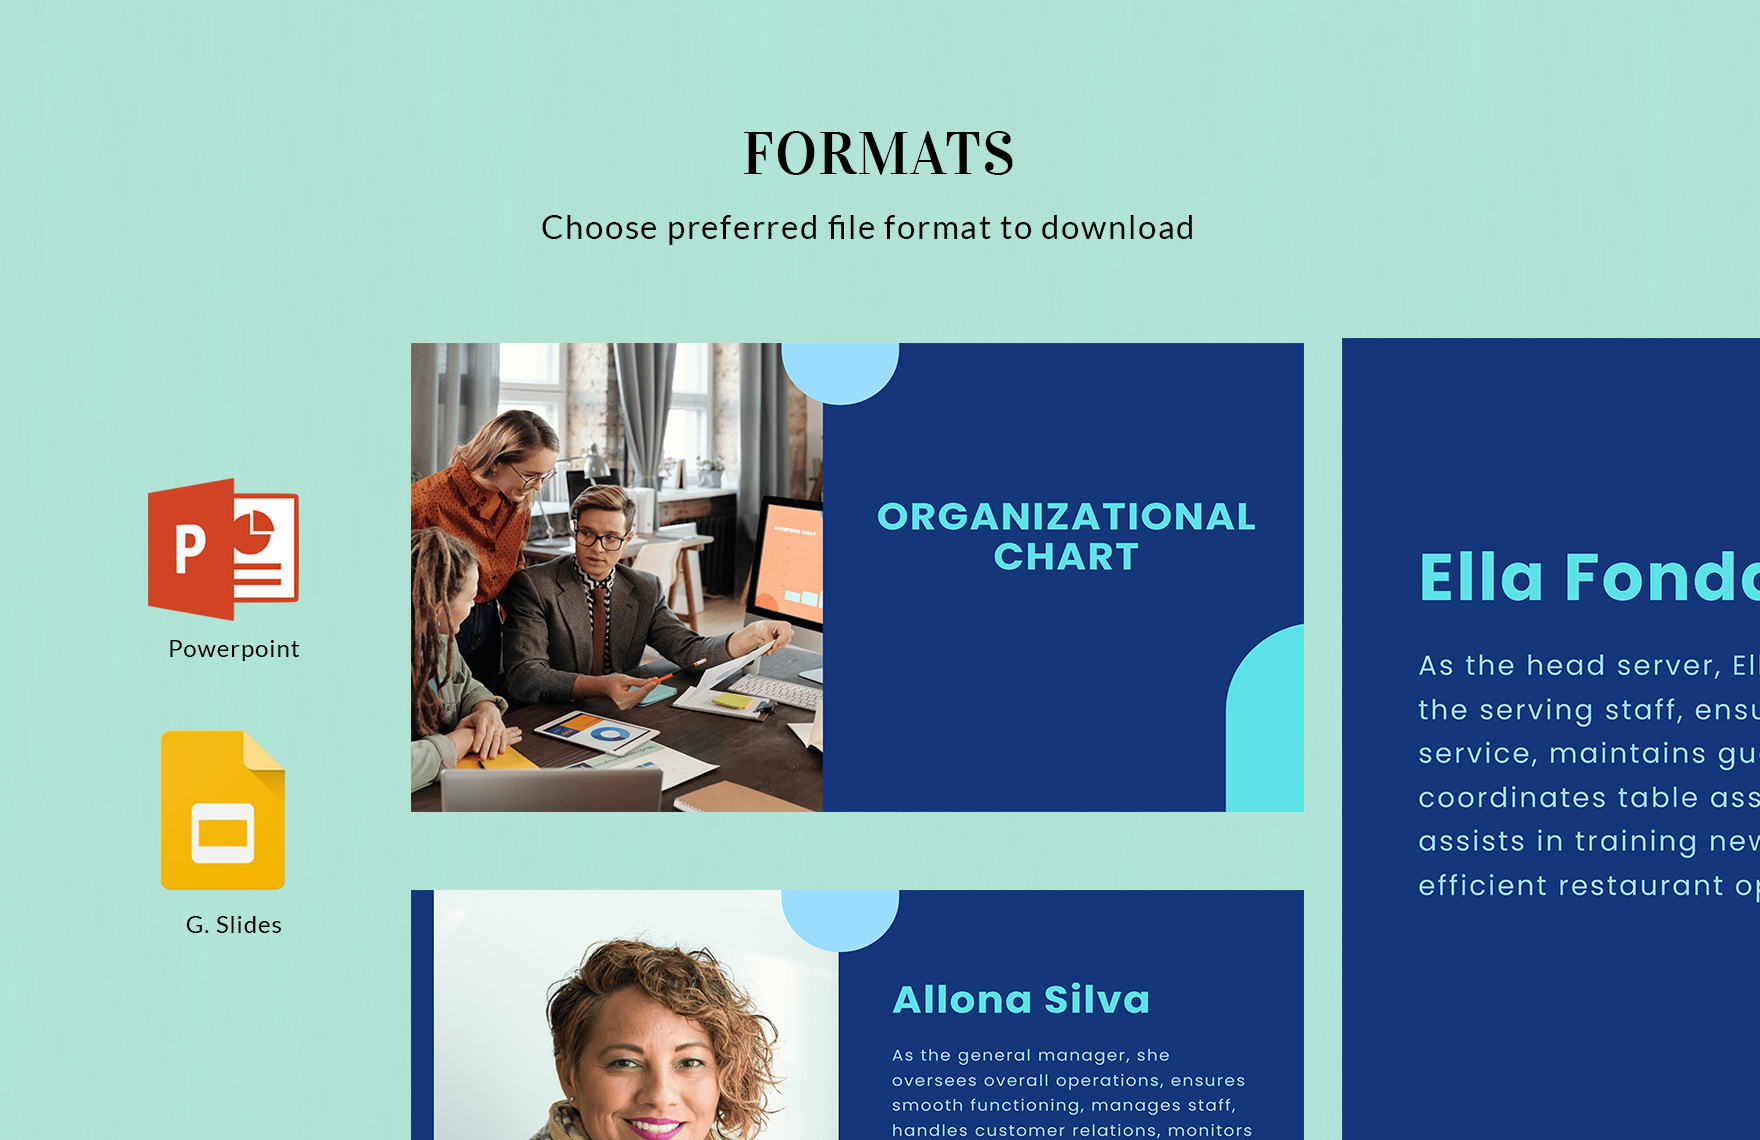 Organizational Chart Presentation Template